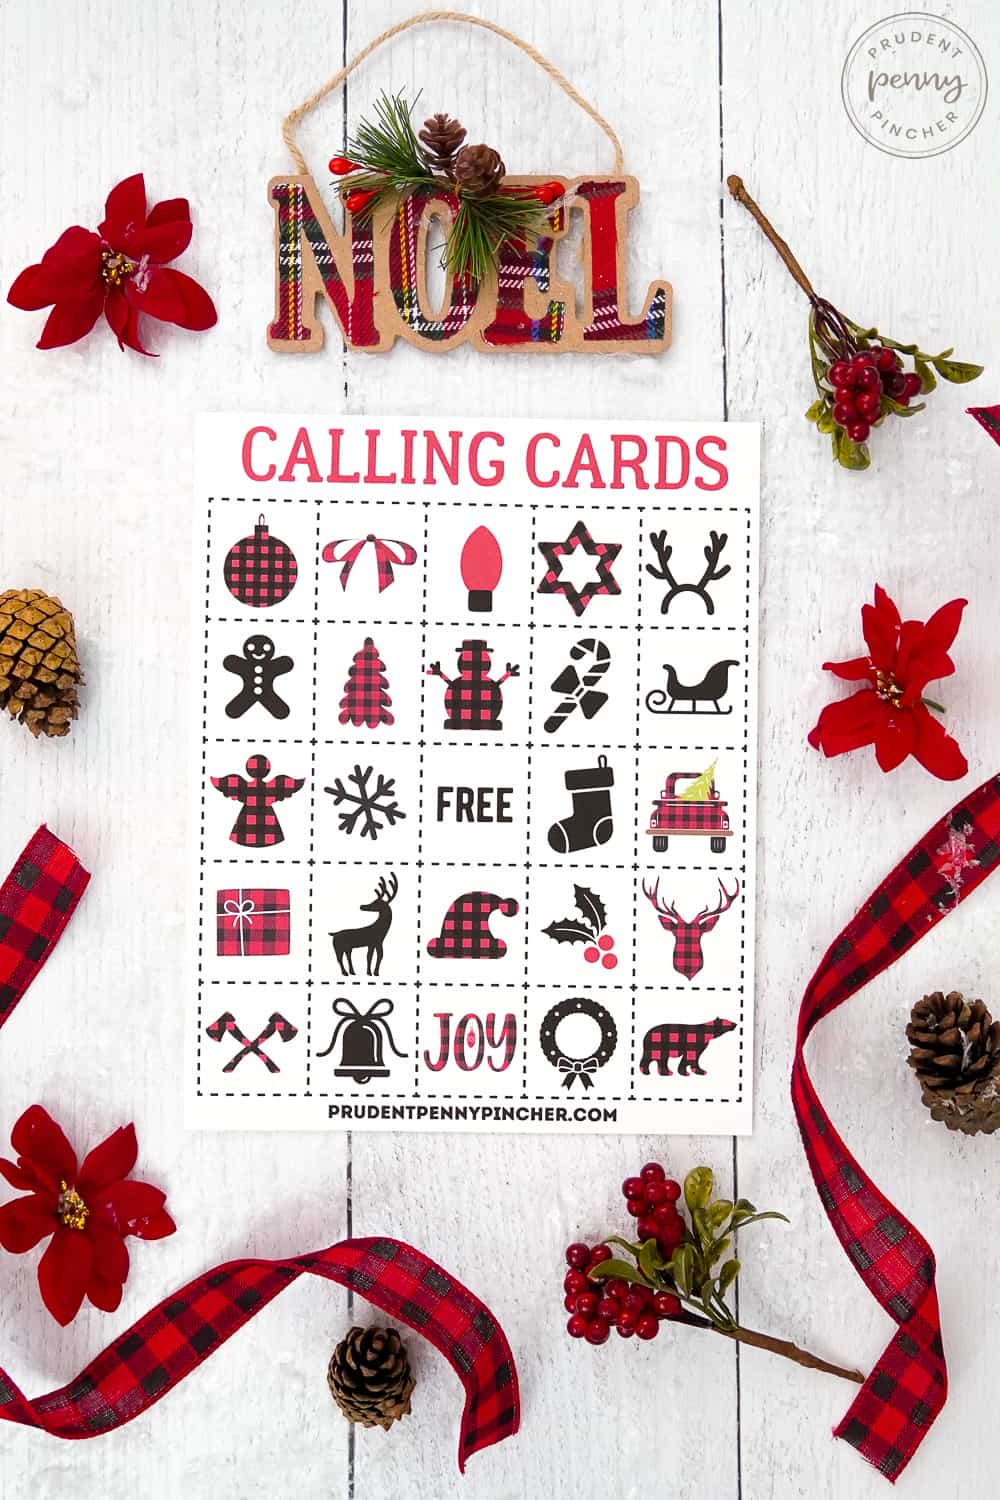 bingo calling cards on winter background